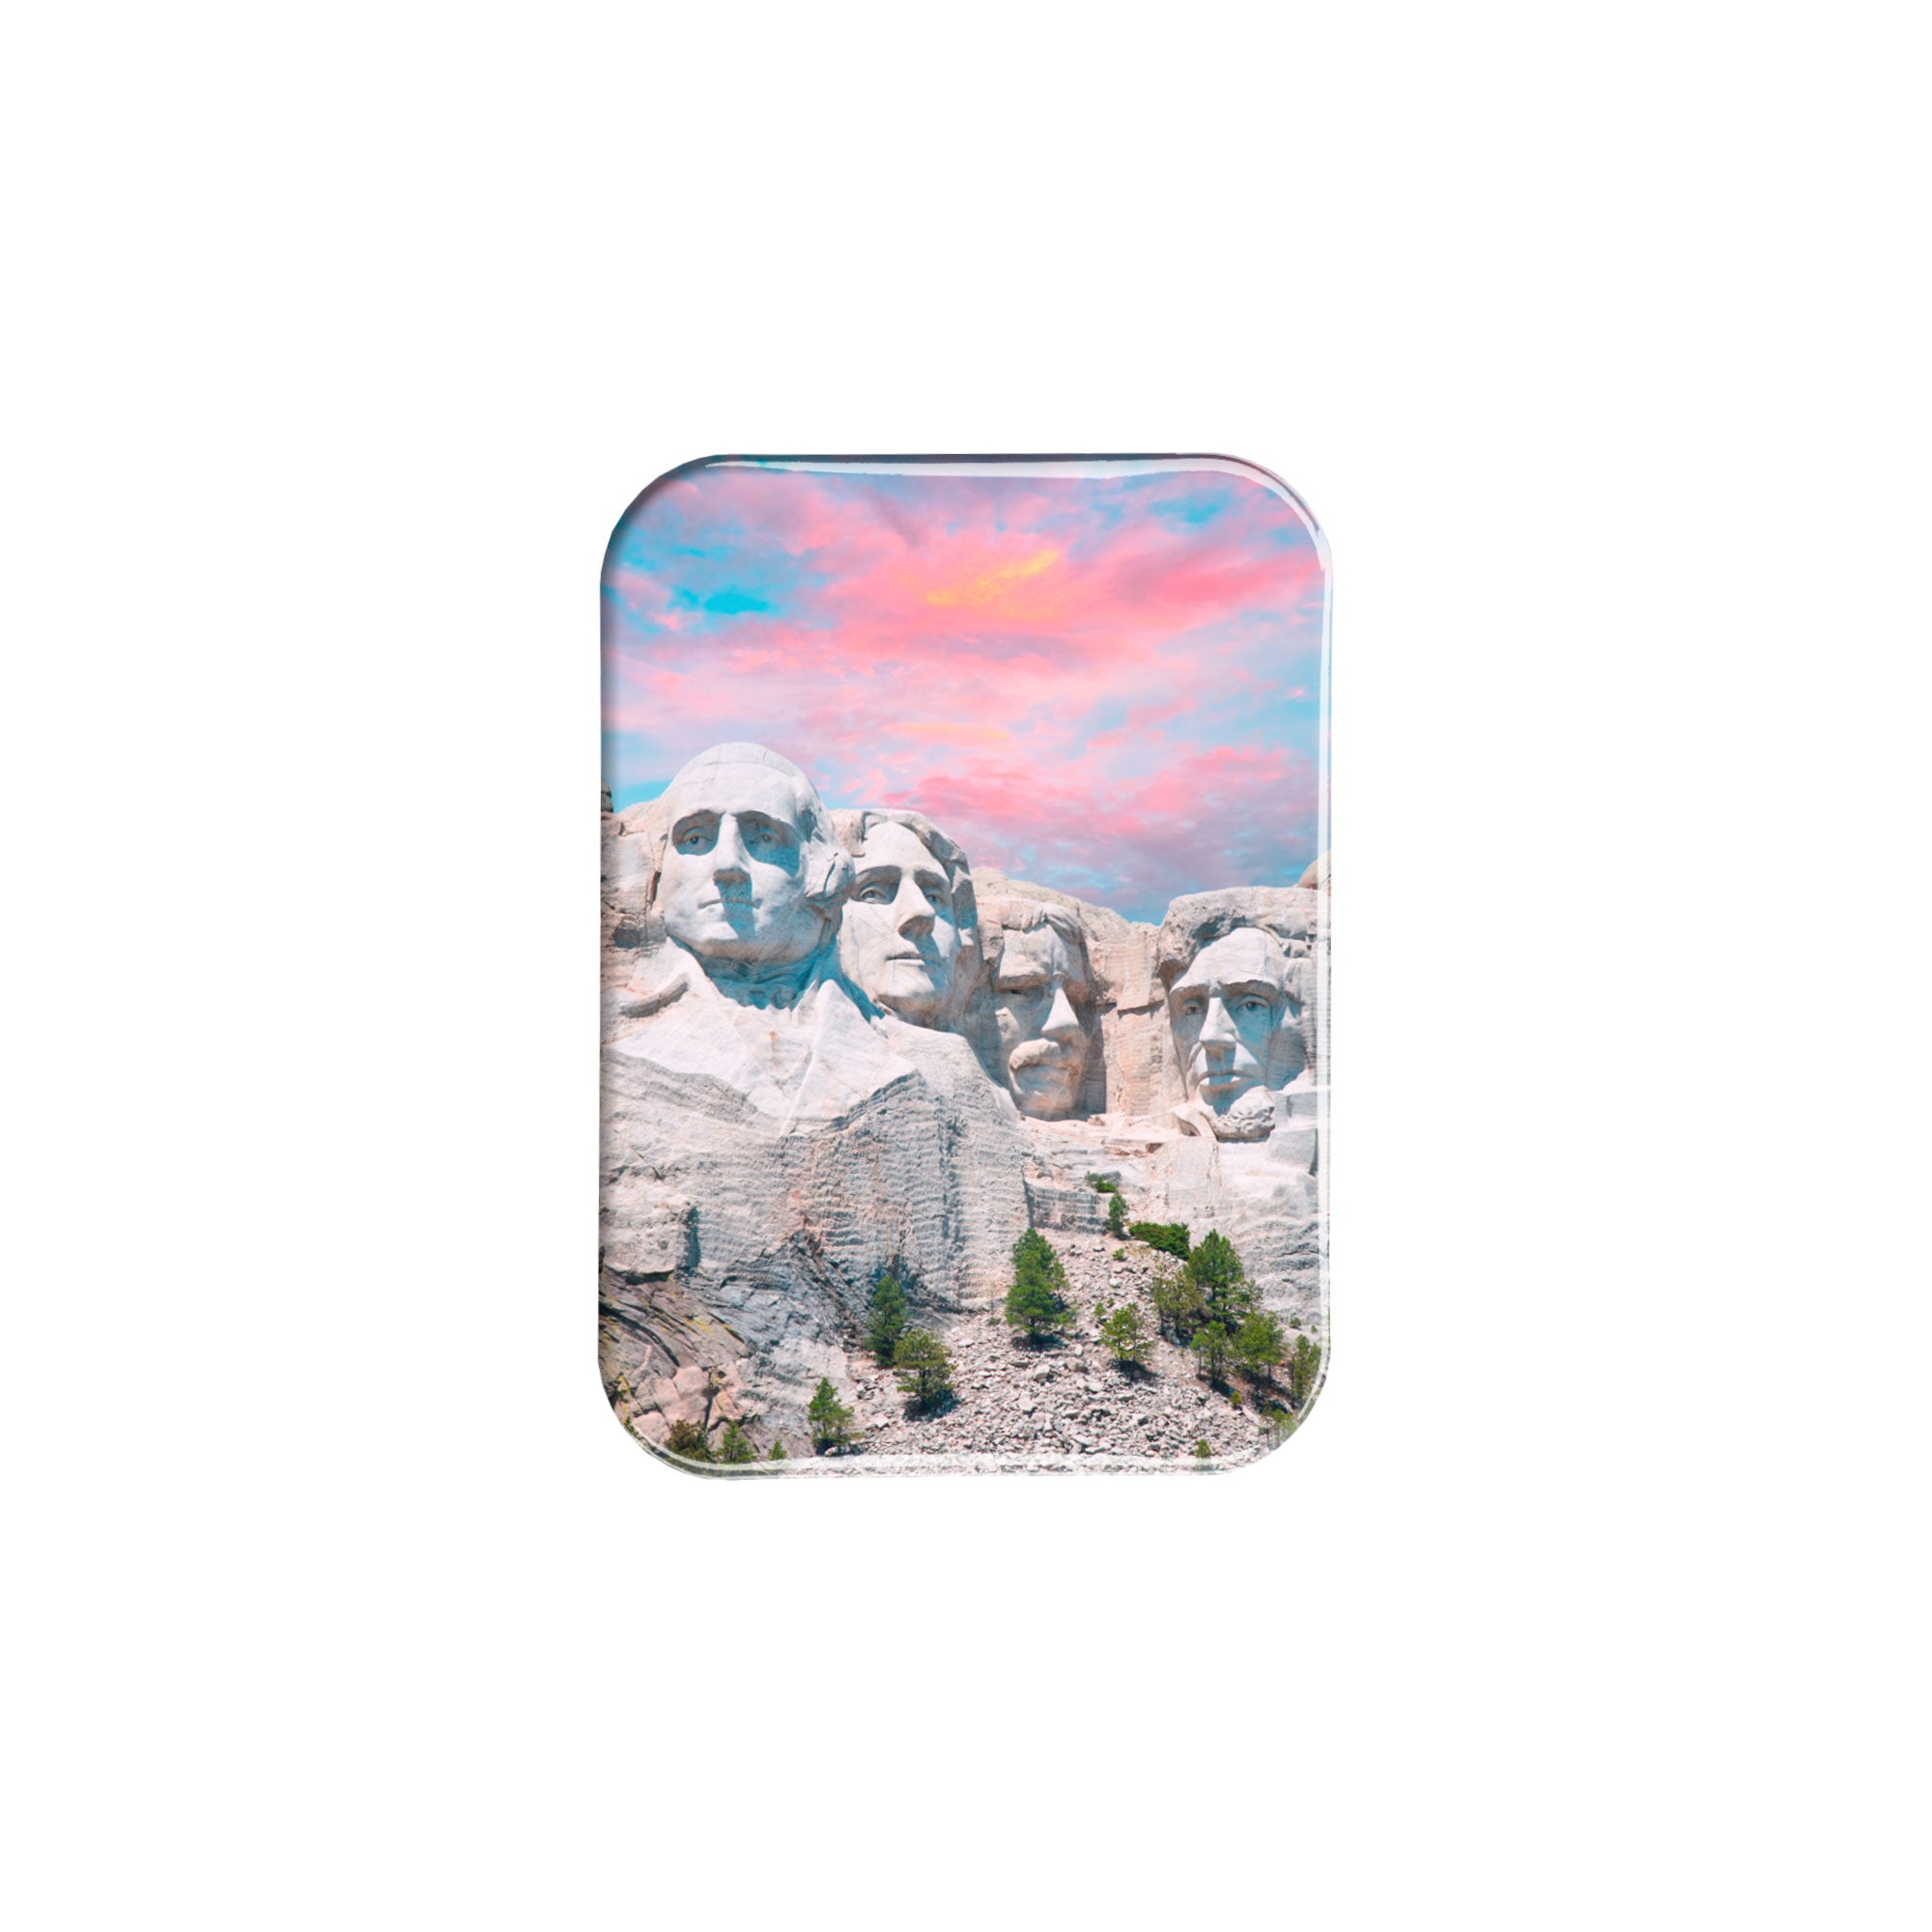 "Mount Rushmore at Dusk" - 2.5" X 3.5" Rectangle Fridge Magnets